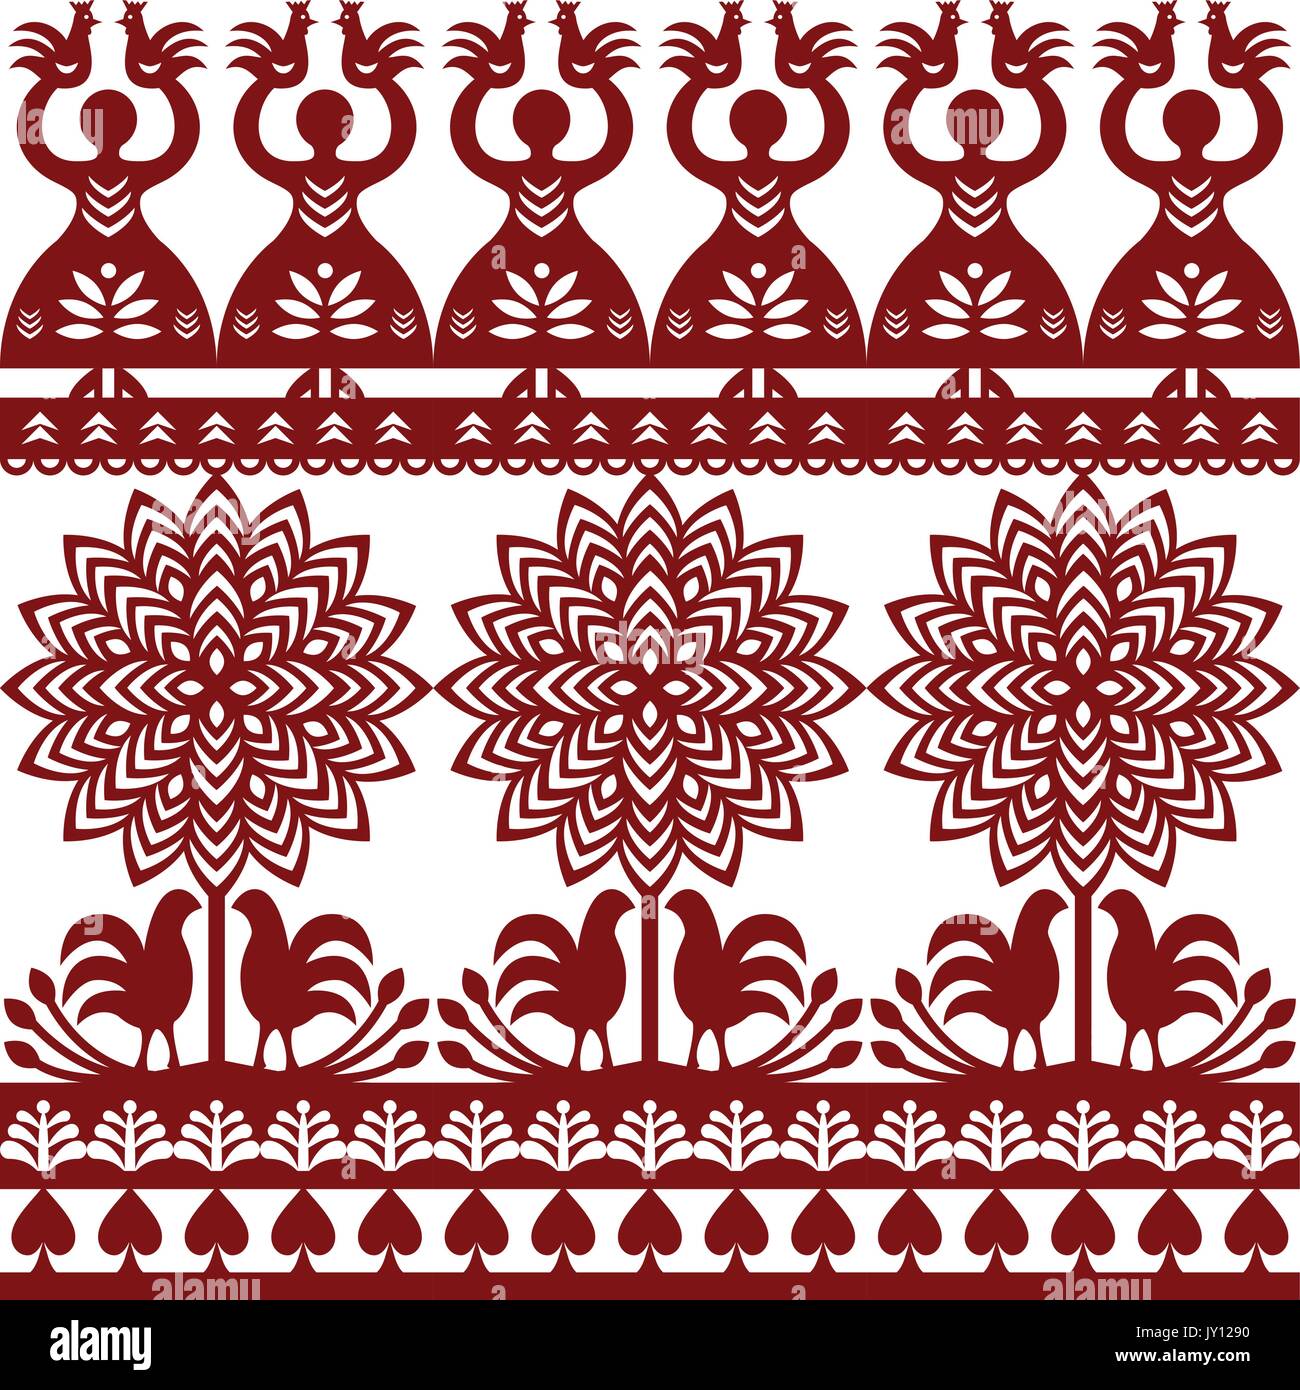 Seamless Polish folk art pattern Wycinanki Kurpiowskie - Kurpie Papercuts   Repetitive vector folk design from the region of Kurpie in Poland with wom Stock Vector